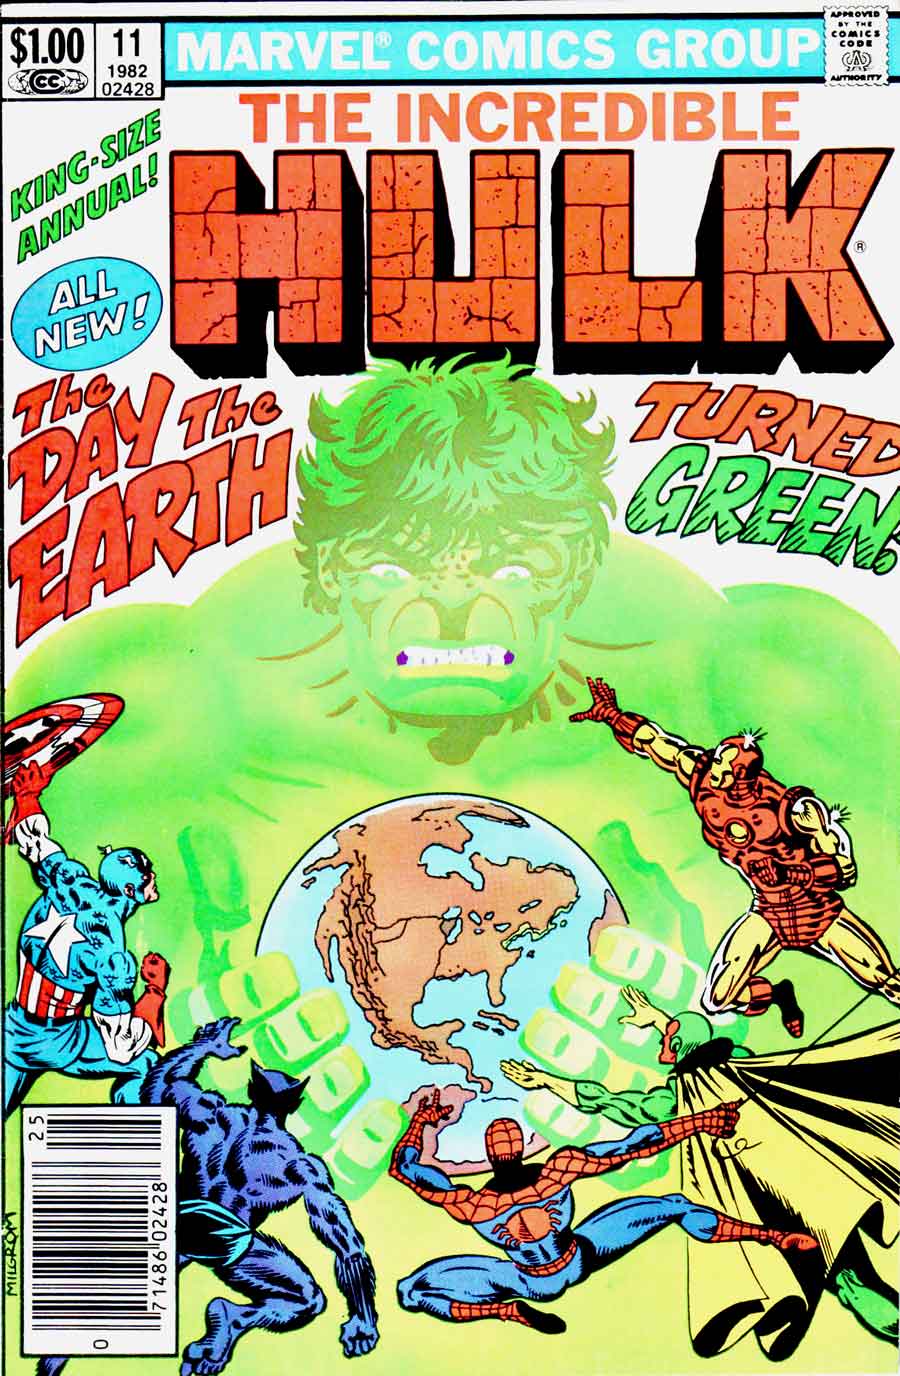 Incredible Hulk v2 annual #11 marvel comic book cover